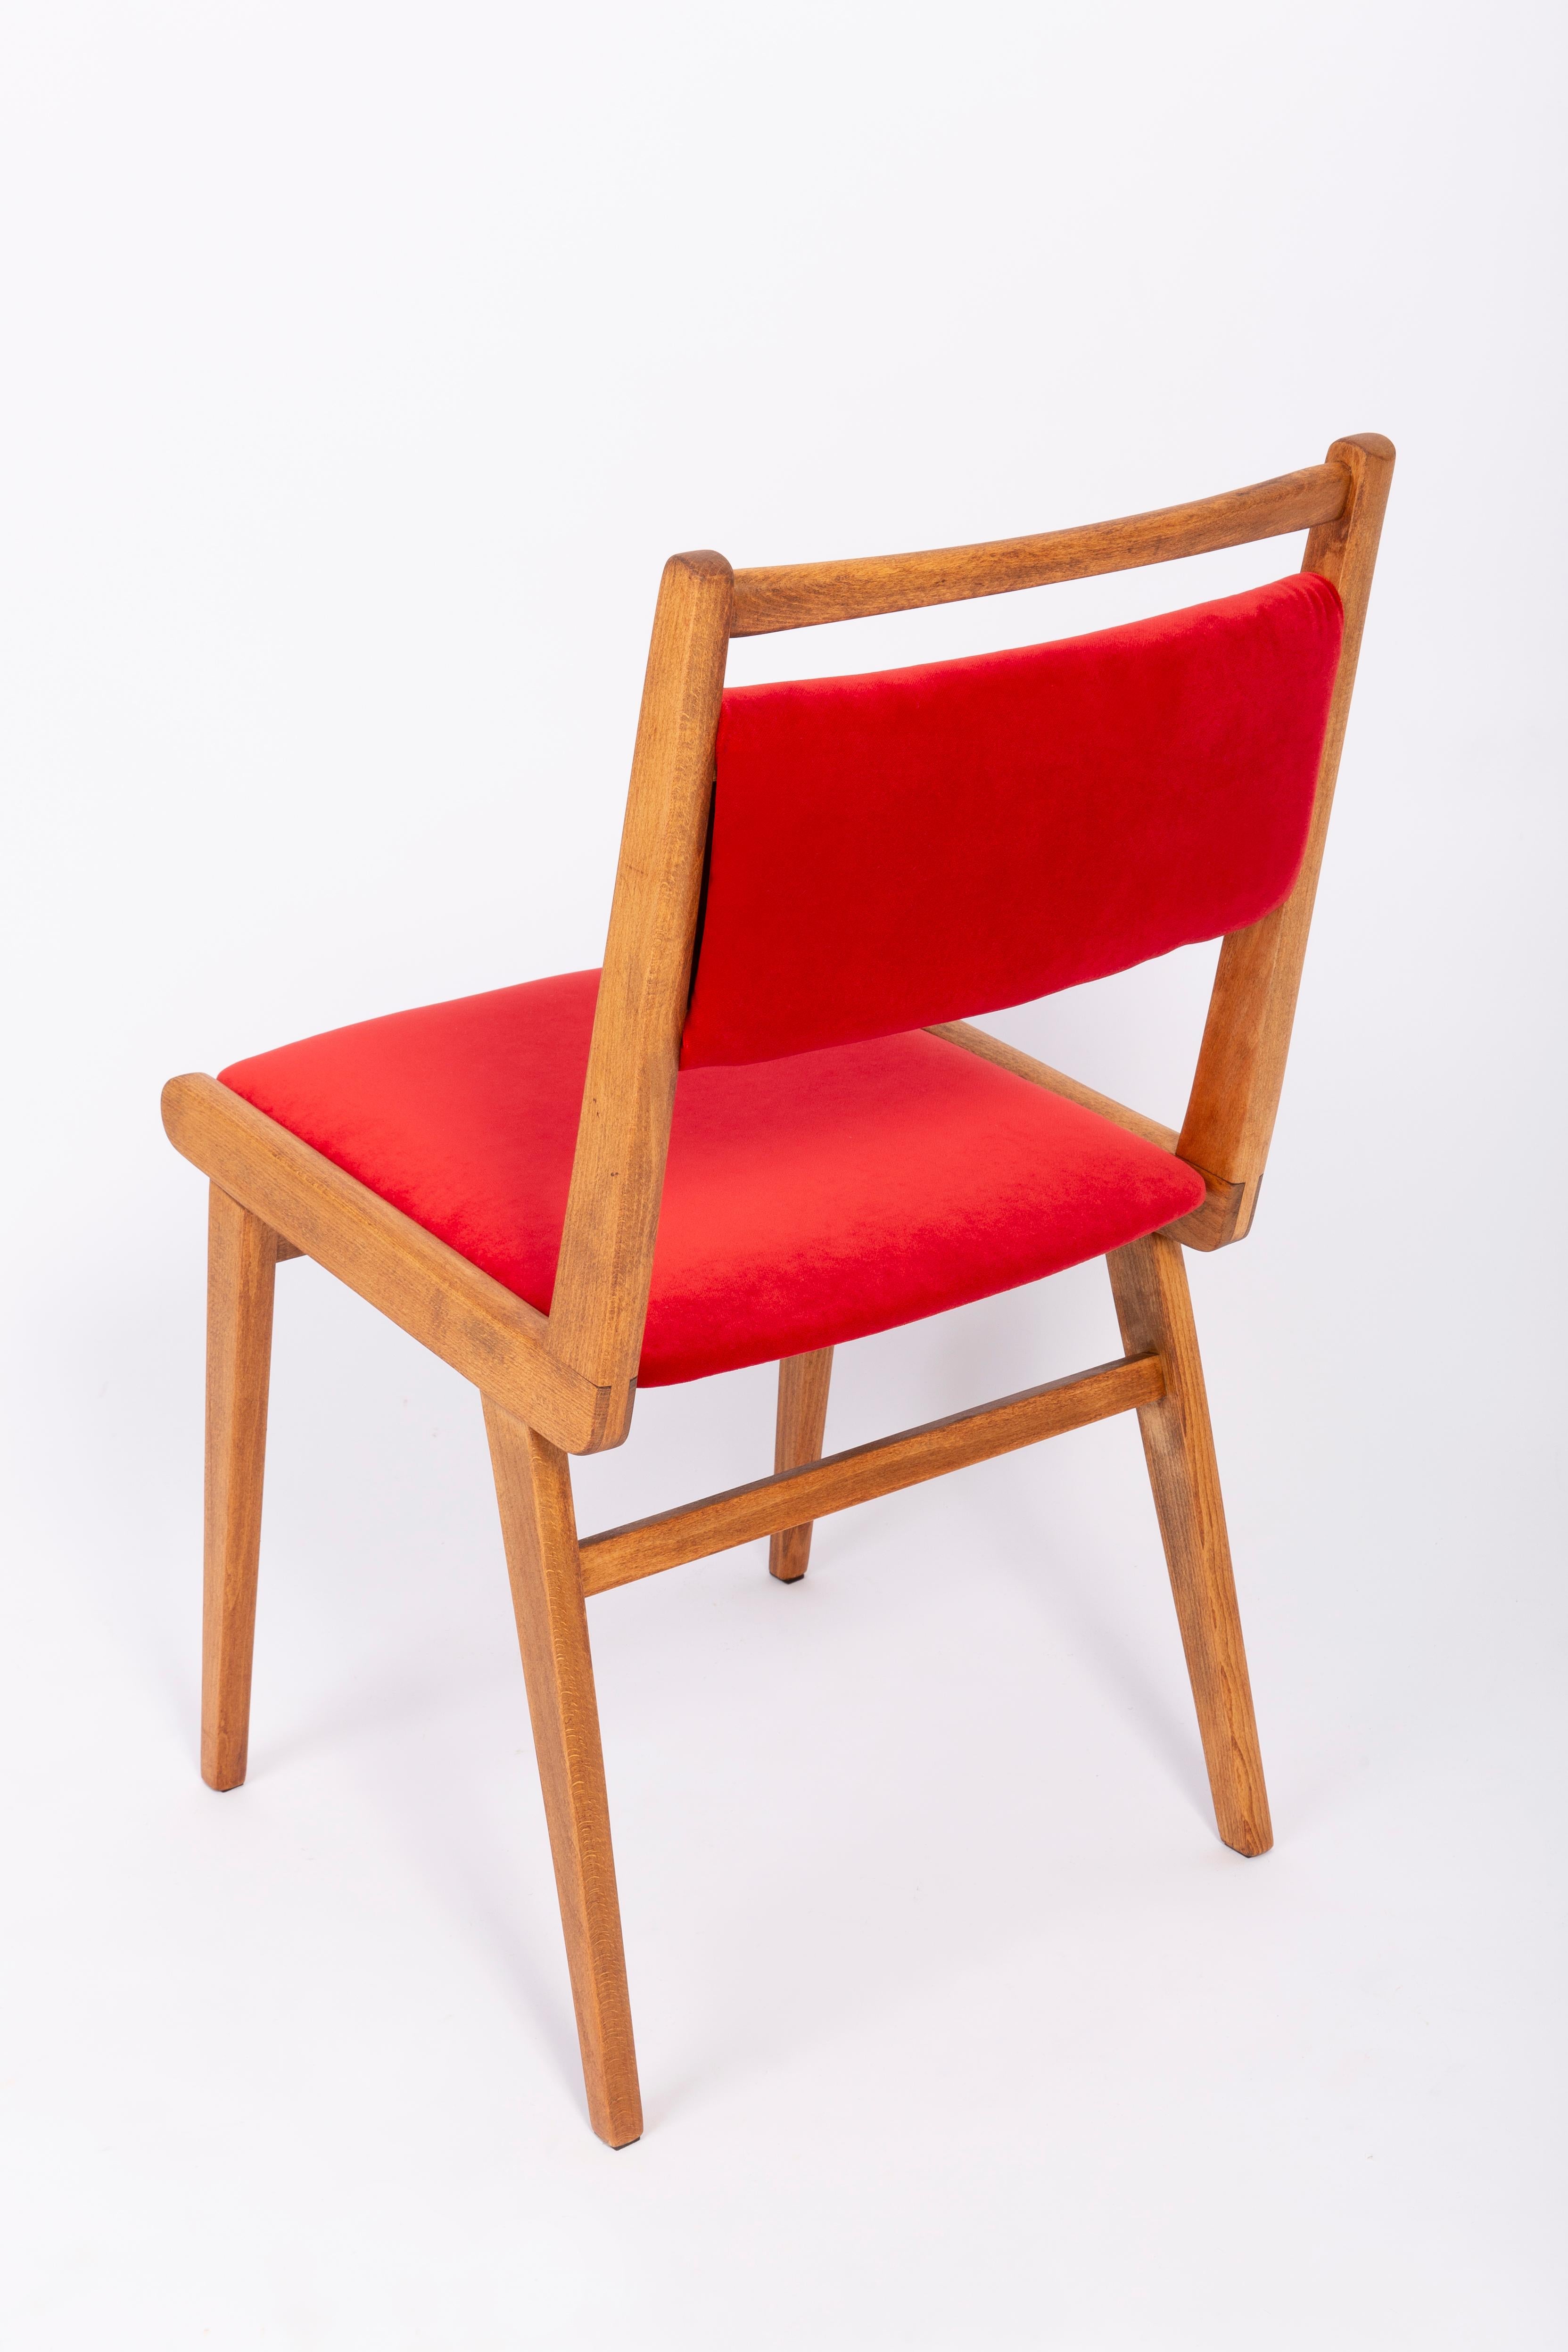 Set of Twelve 20th Century Red Velvet Chairs, by Rajmund Halas, Poland, 1960s For Sale 2